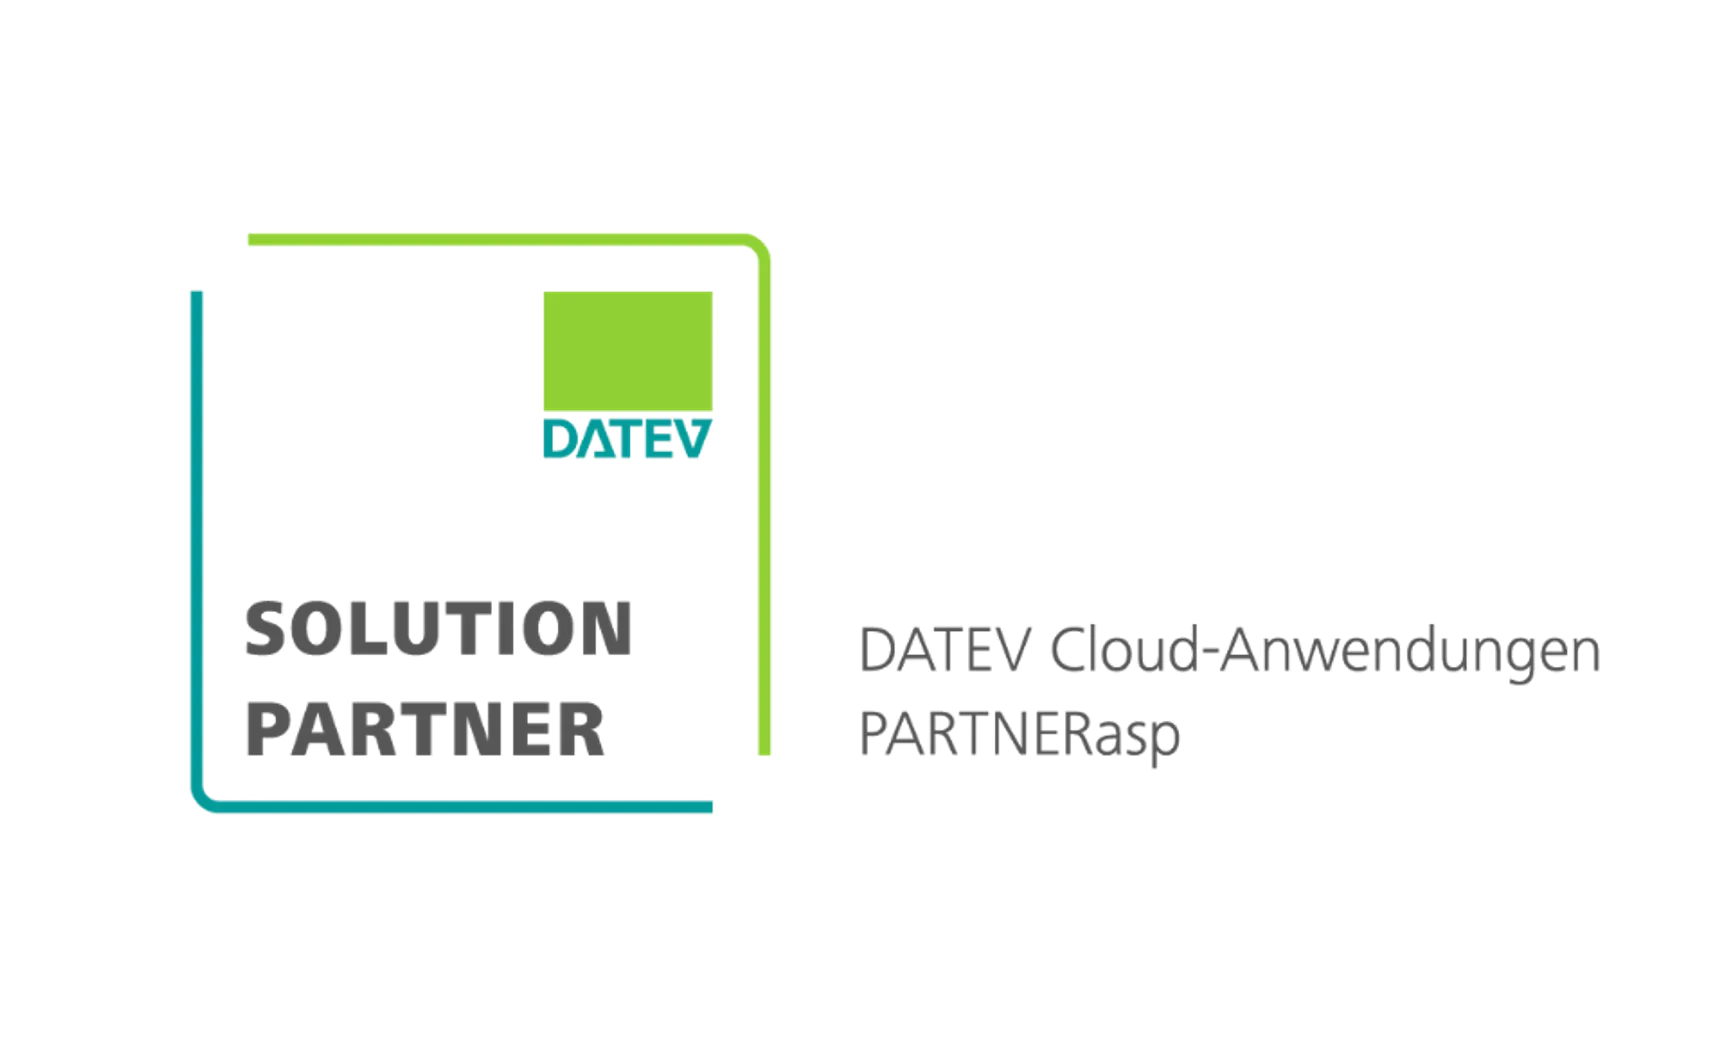 DATEV Solution Partner DATEV Cloud Anwendungen PARTNERasp